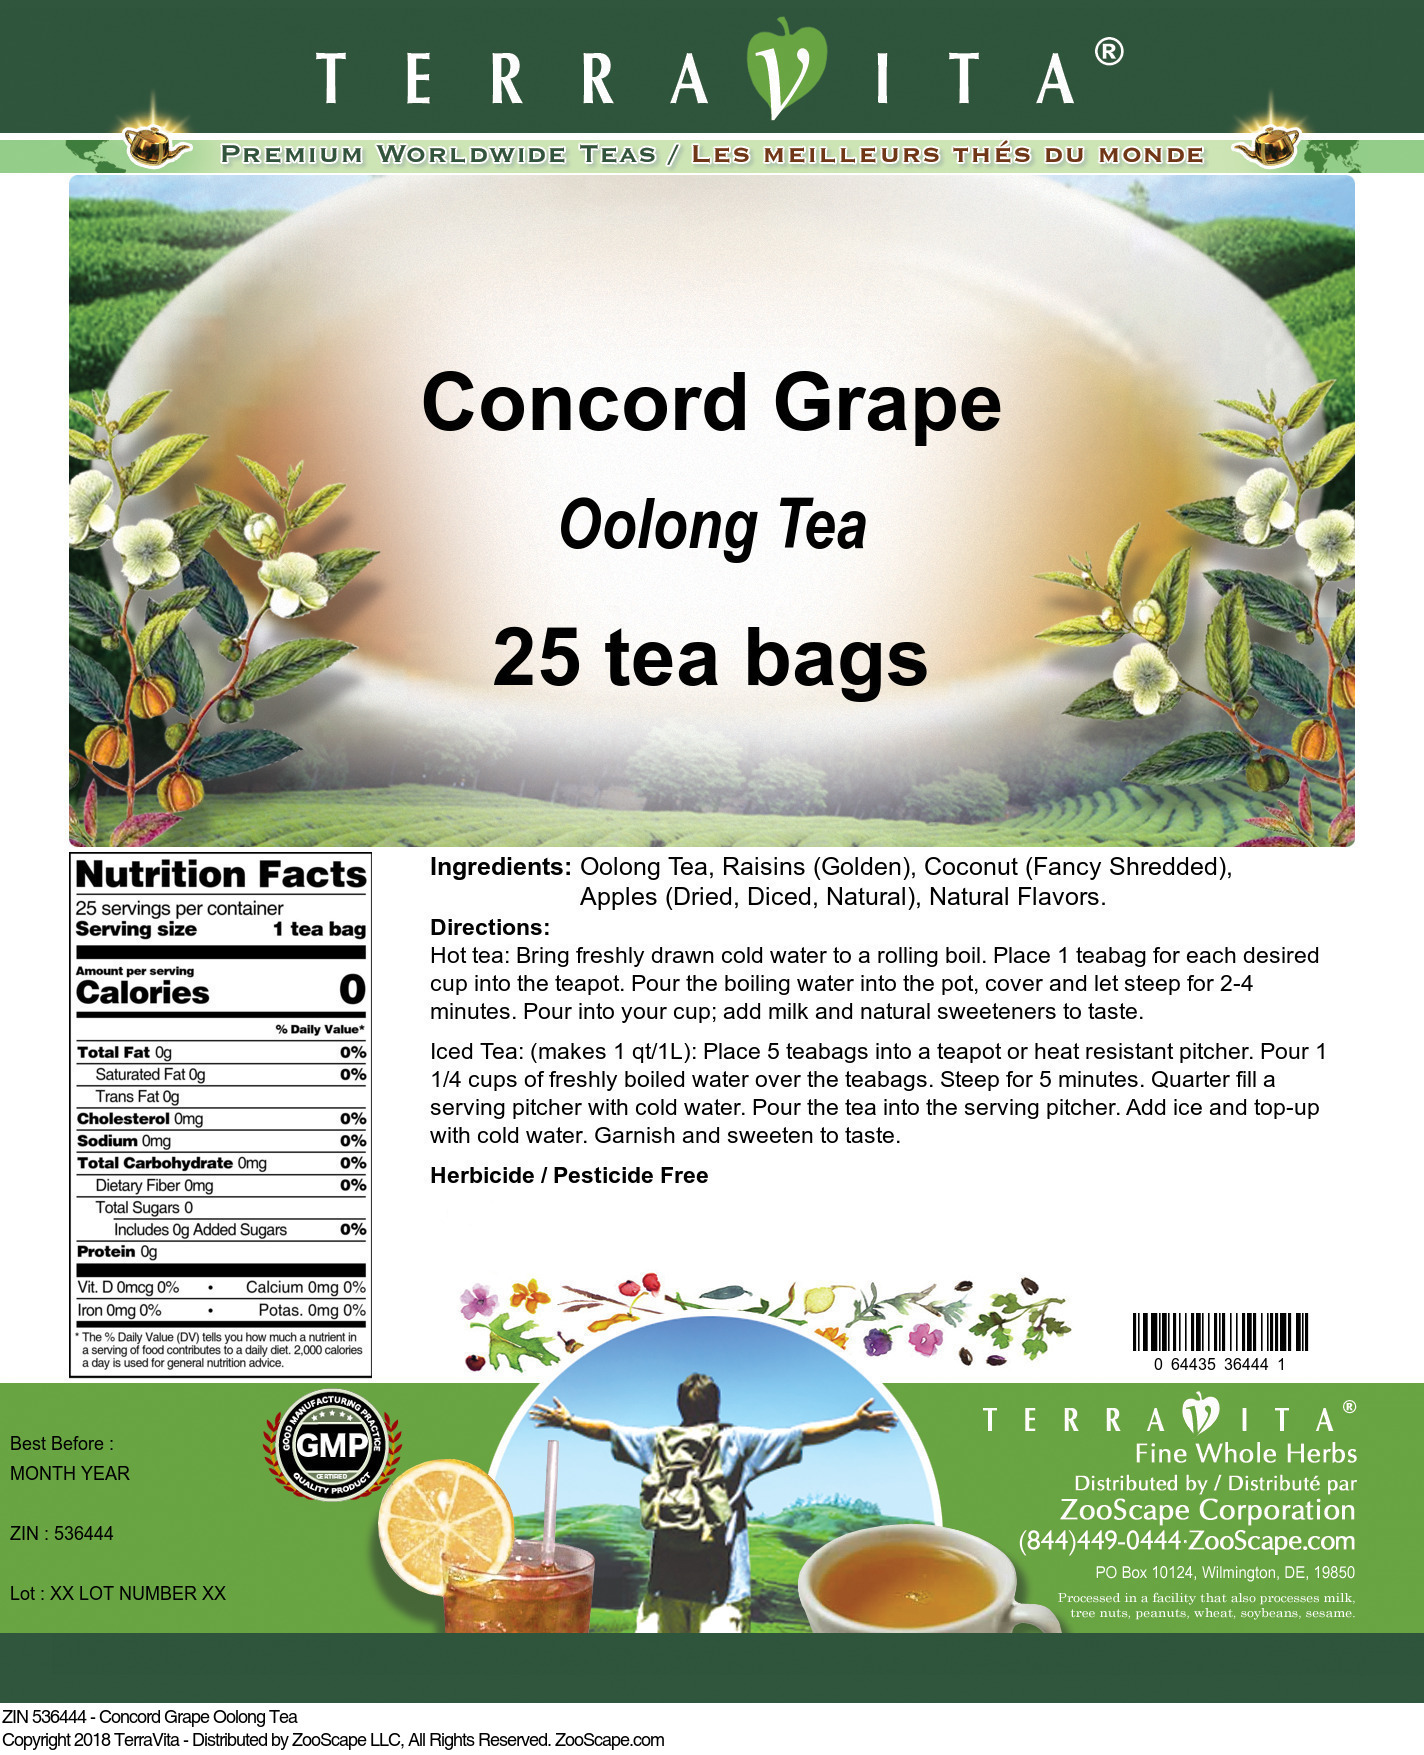 Concord Grape Oolong Tea - Label